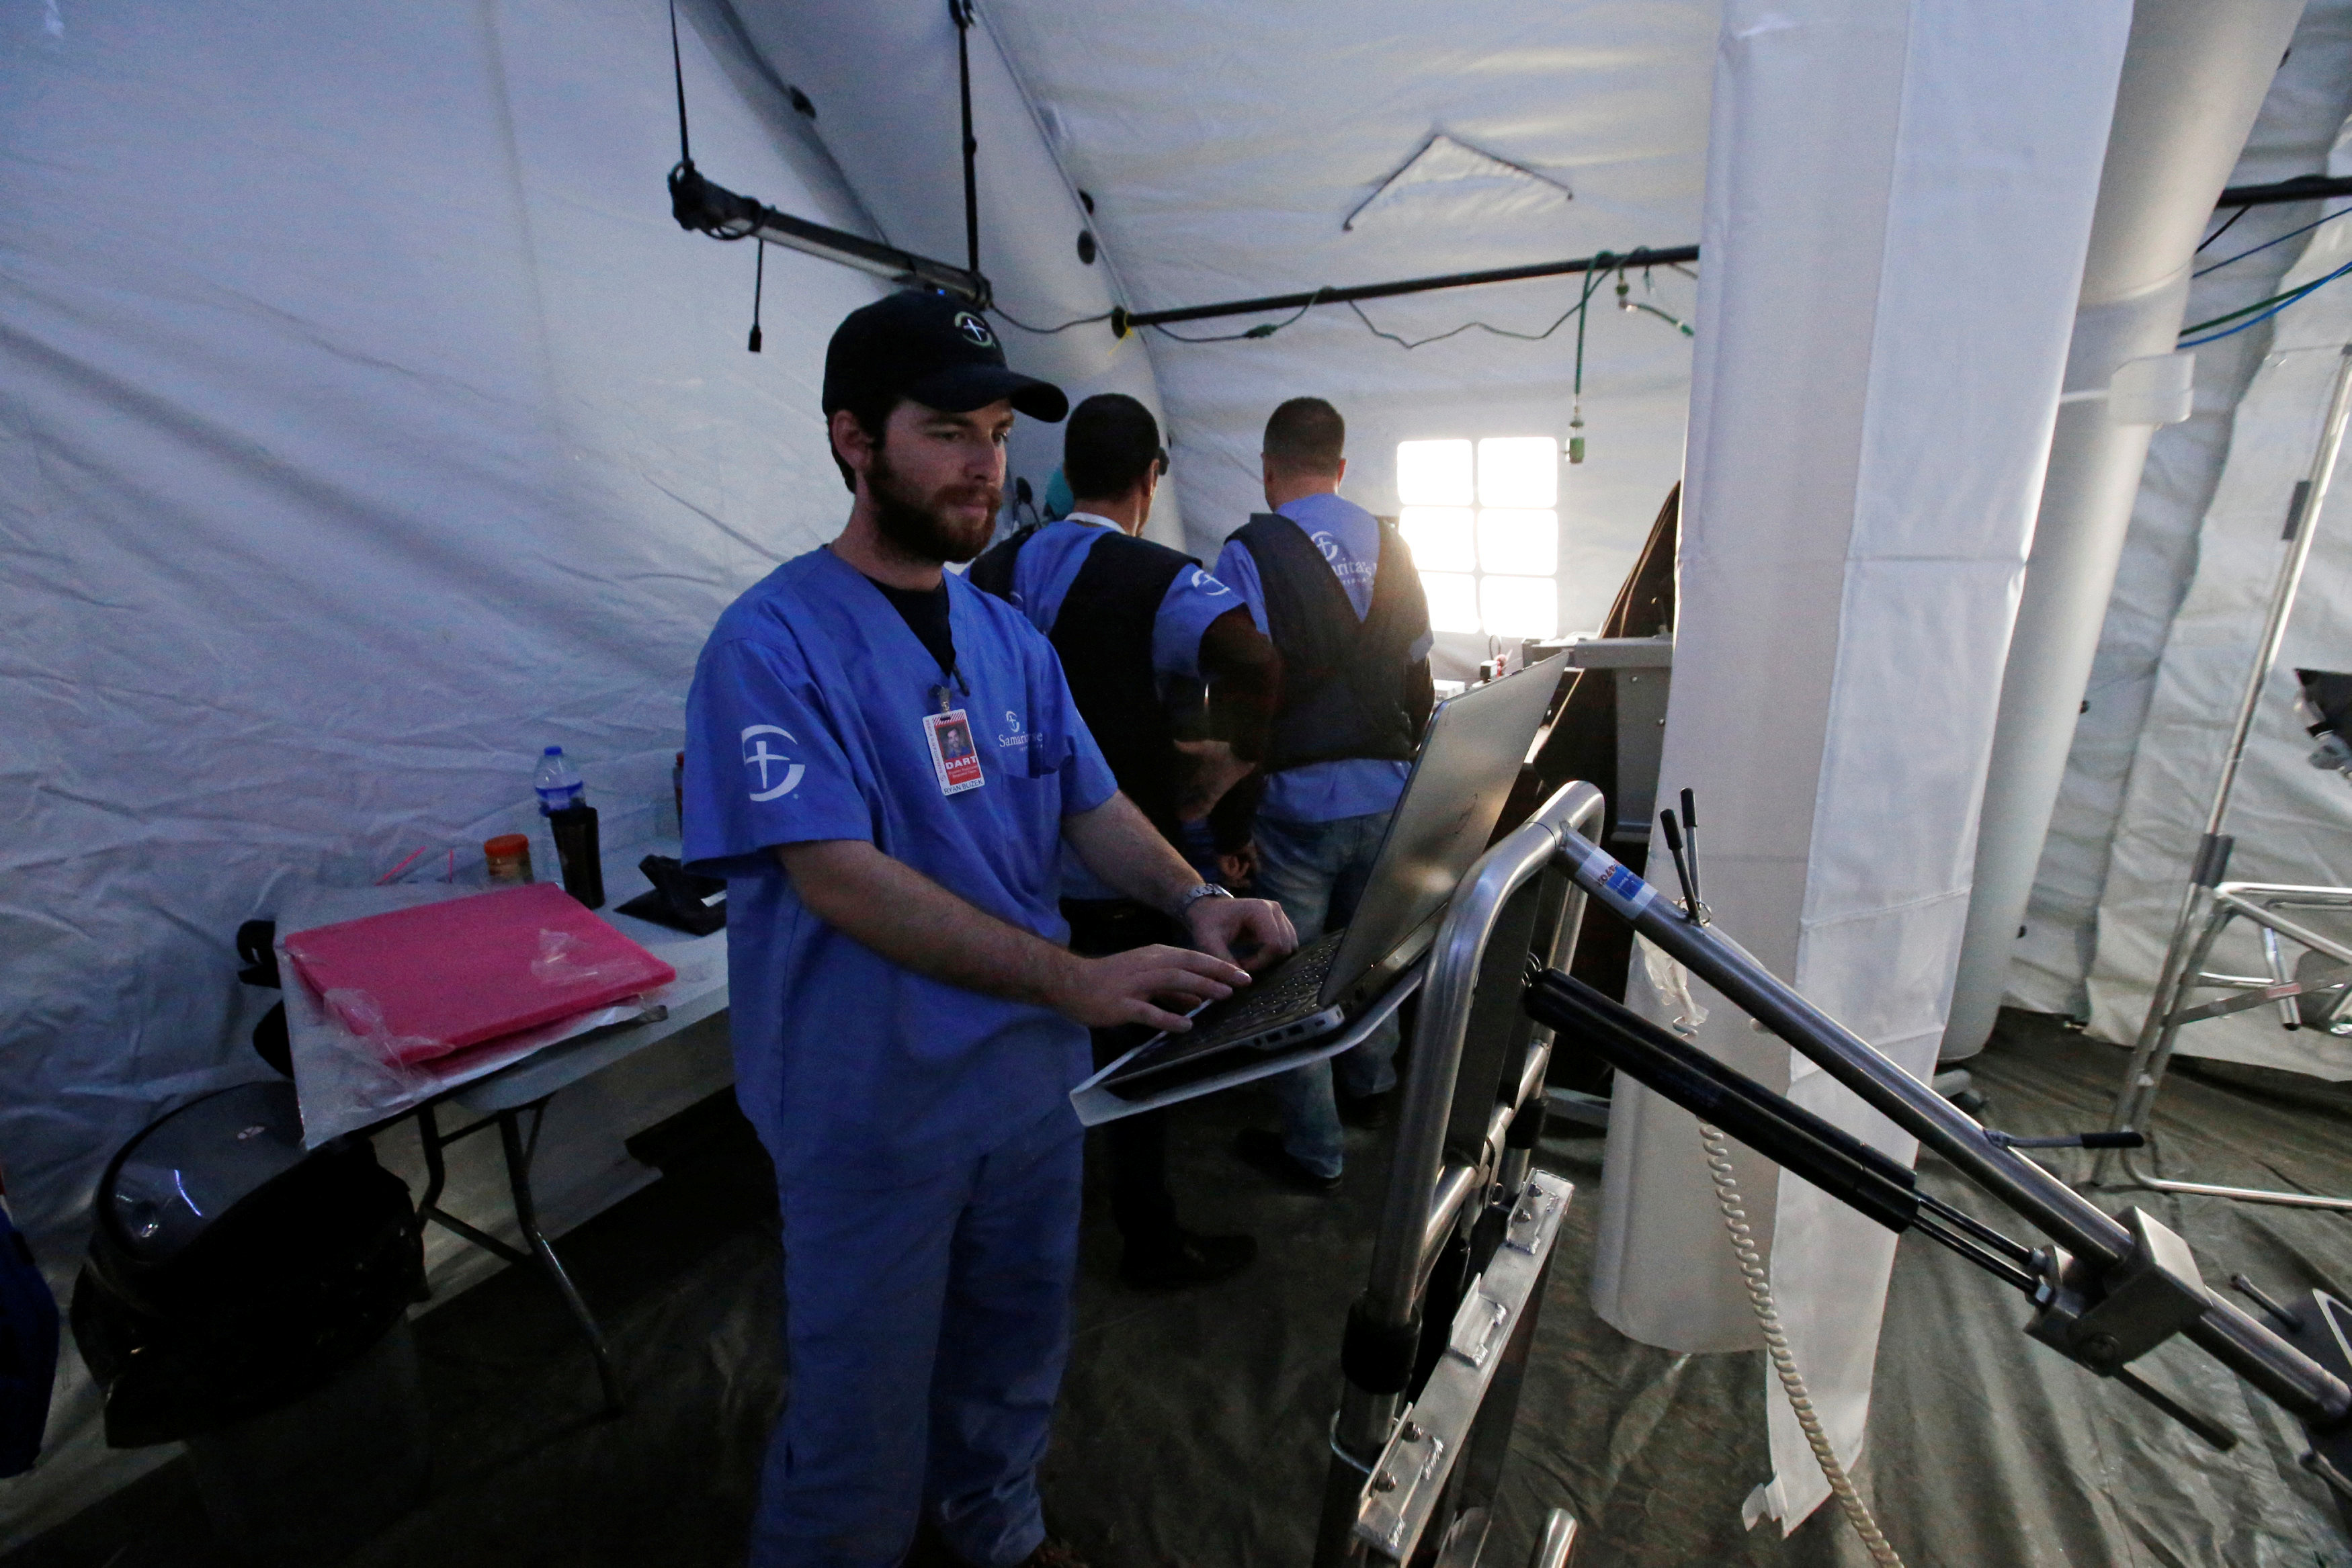 Field hospital helps treat injured civilians, soldiers near Mosul